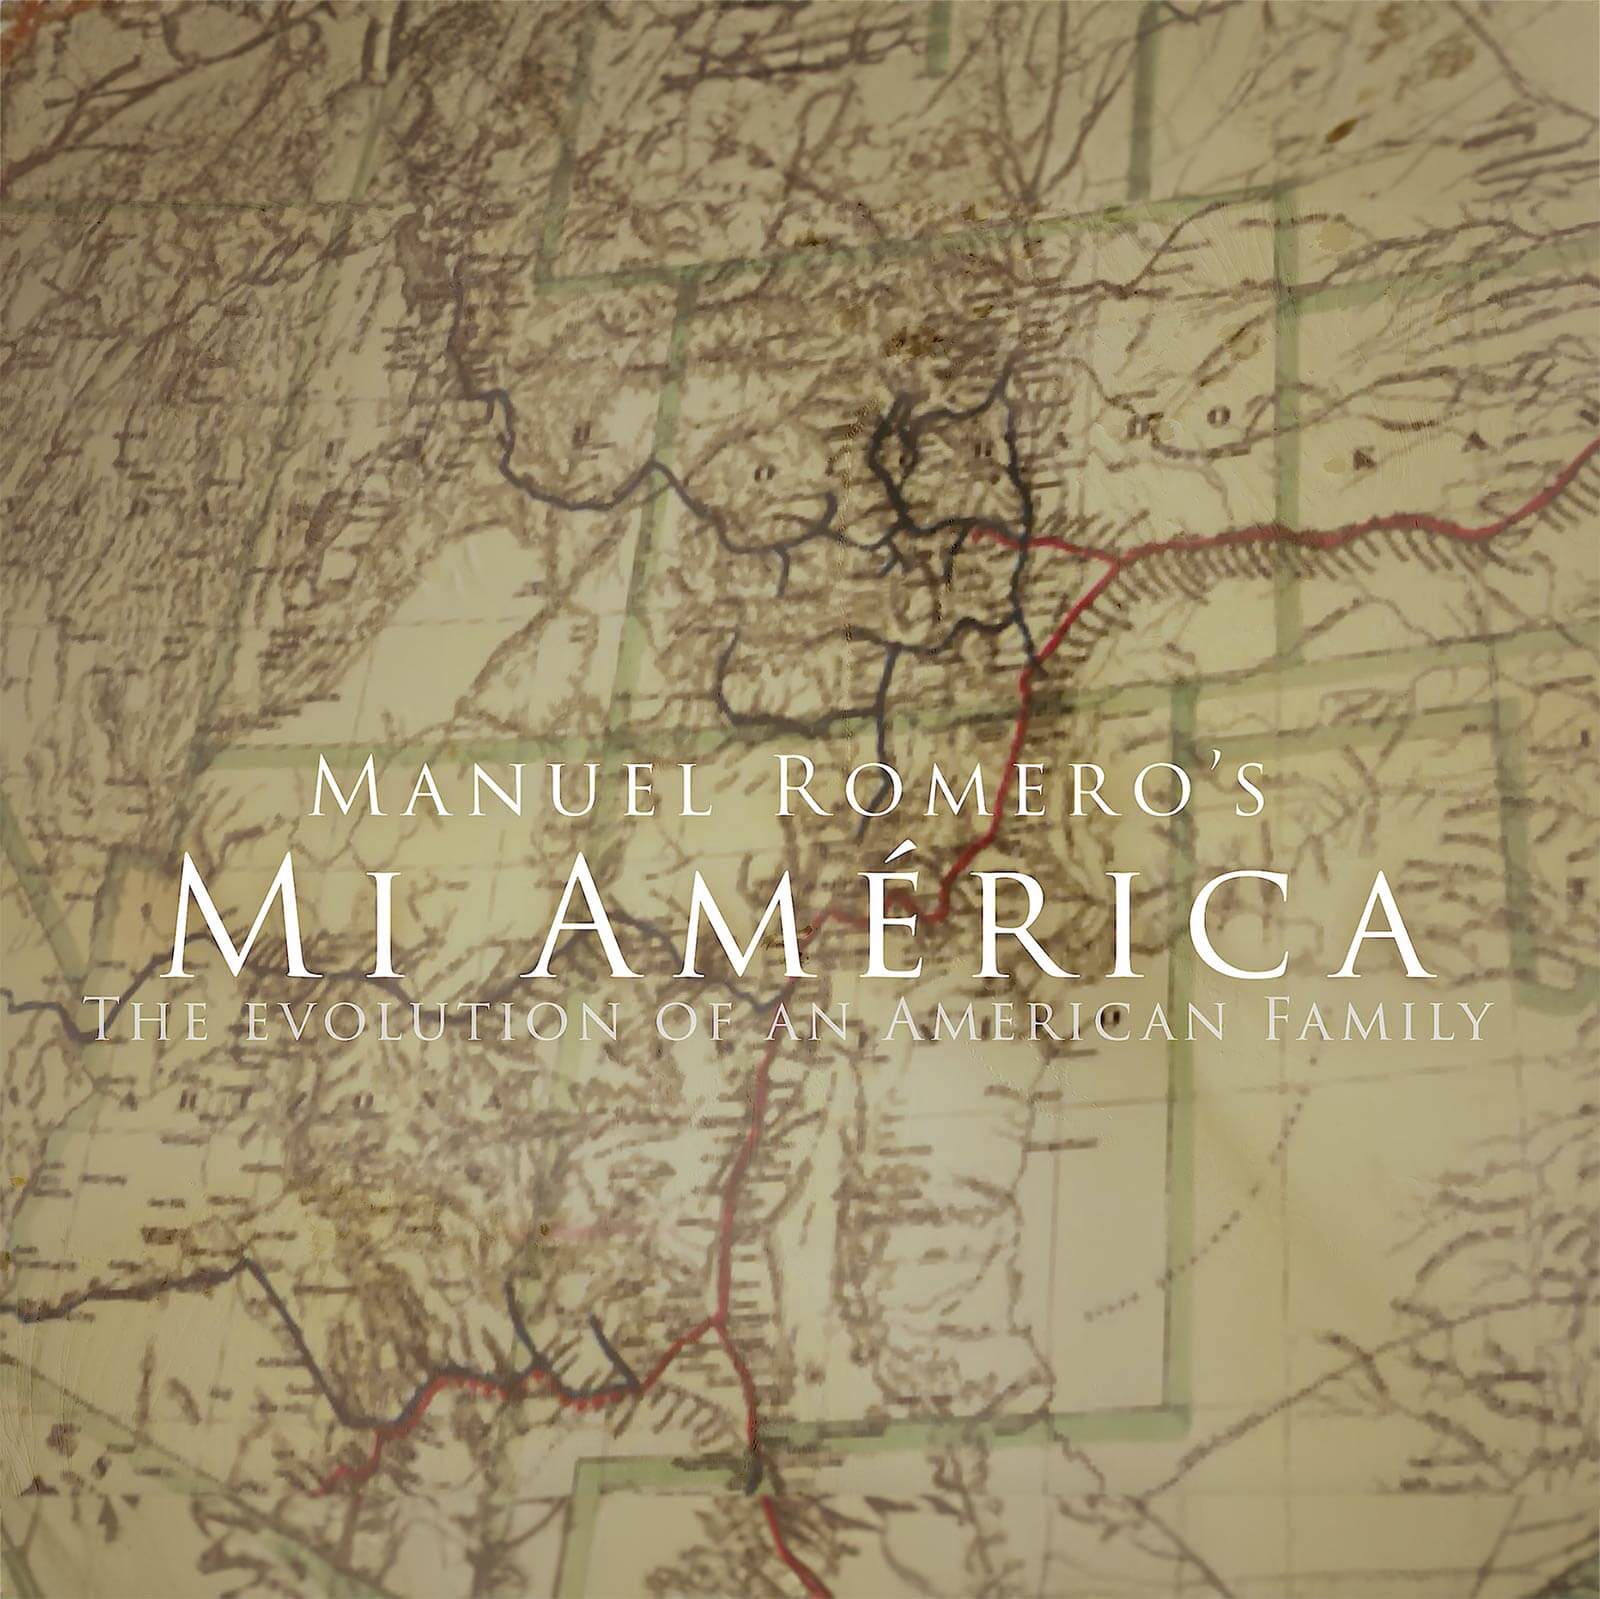 Miamerica Documentary trailer